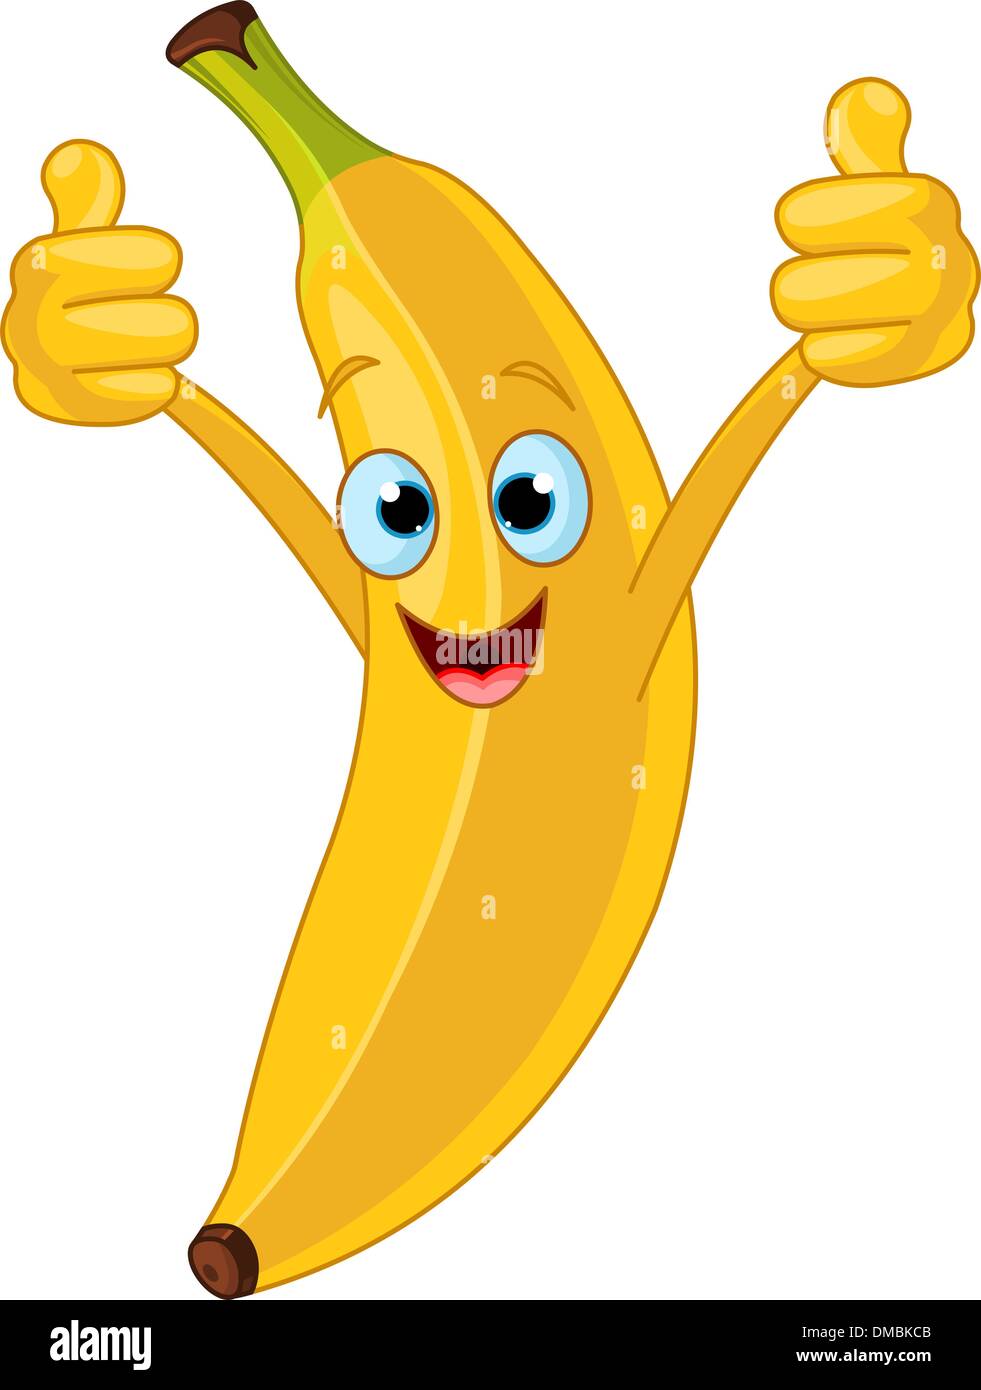 Cheerful Cartoon Banana character Stock Vector